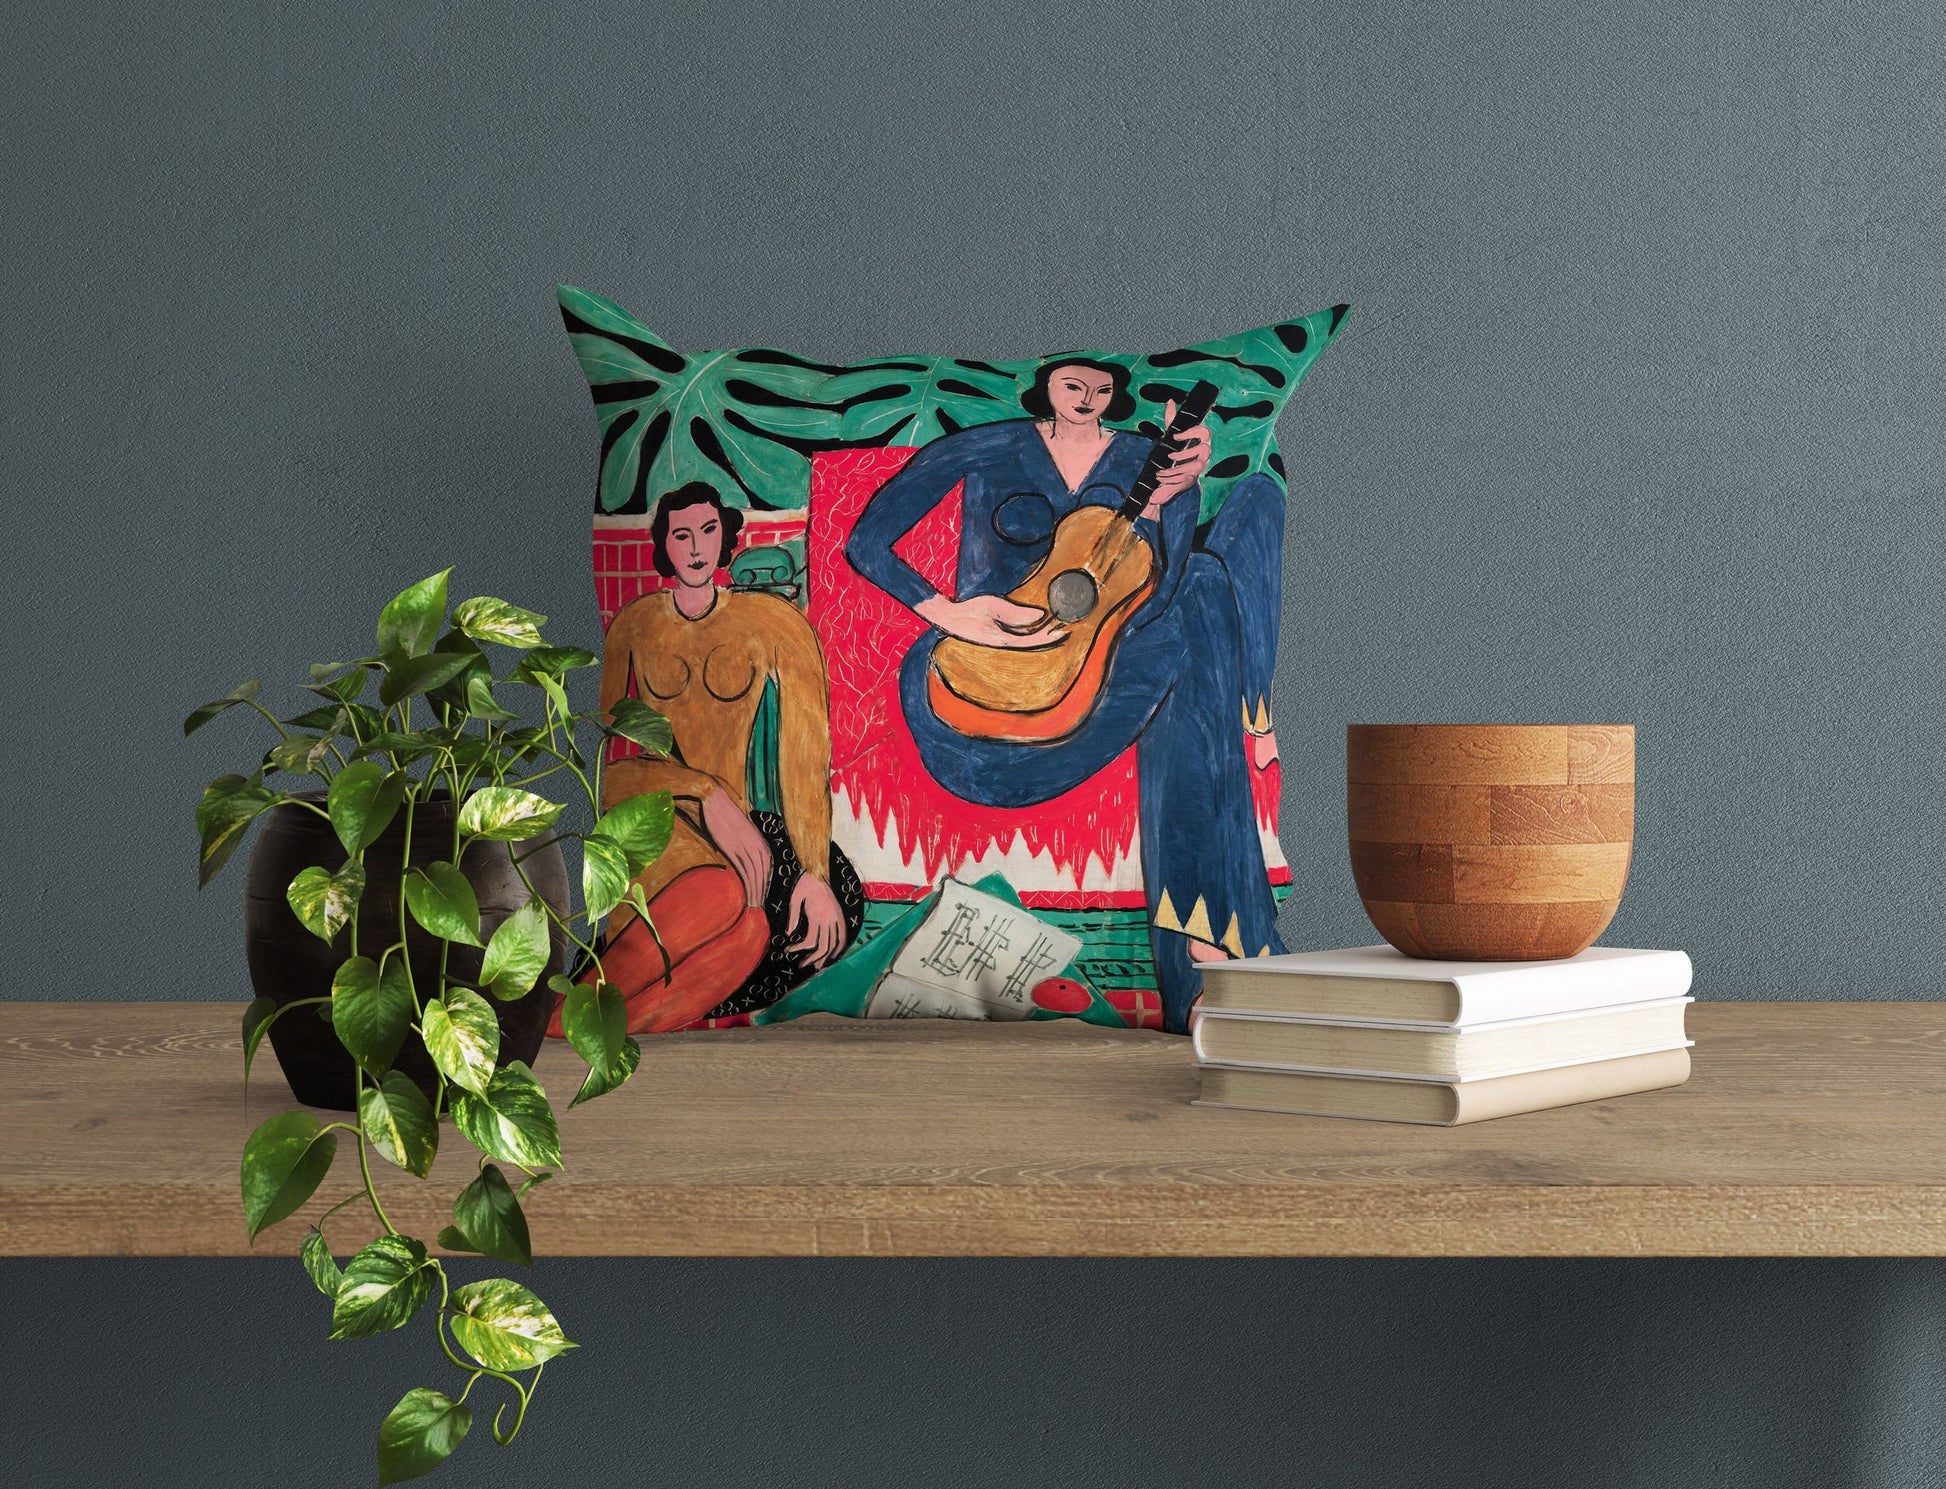 Henri Matisse Famous Art, Throw Pillow Cover, Abstract Throw Pillow, Art Pillow, Colorful Pillow Case, Fauvist Pillow, Playroom Decor